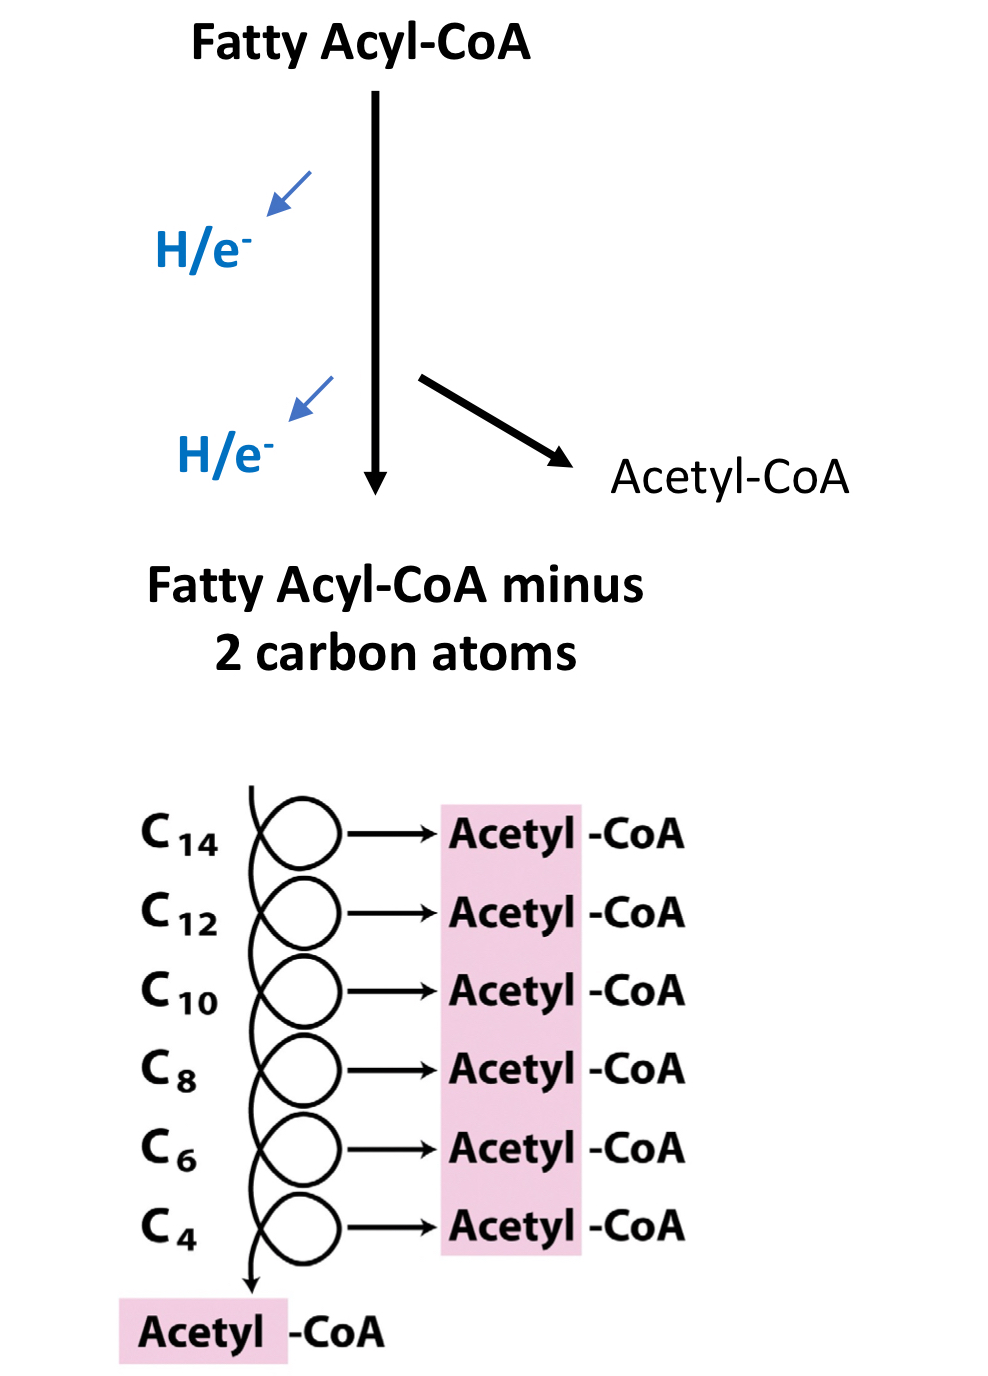 <ul><li><p>FAs trapped in the cytoplasm as <u><strong>Fatty Acyl-CoA</strong></u></p></li><li><p>Transported into mitochondria -  Carrier: <strong>Carnitine</strong></p></li><li><p>H/e- ripped out by FAD and NAD+</p></li><li><p>FA part loses an <strong>acetate chunk</strong></p></li><li><p>Cycle repeats</p></li><li><p>Each round of ß-oxidation gives</p><ul><li><p>1 acetyl CoA</p></li><li><p>1 NADH</p></li><li><p>1 FADH2</p></li></ul></li></ul>